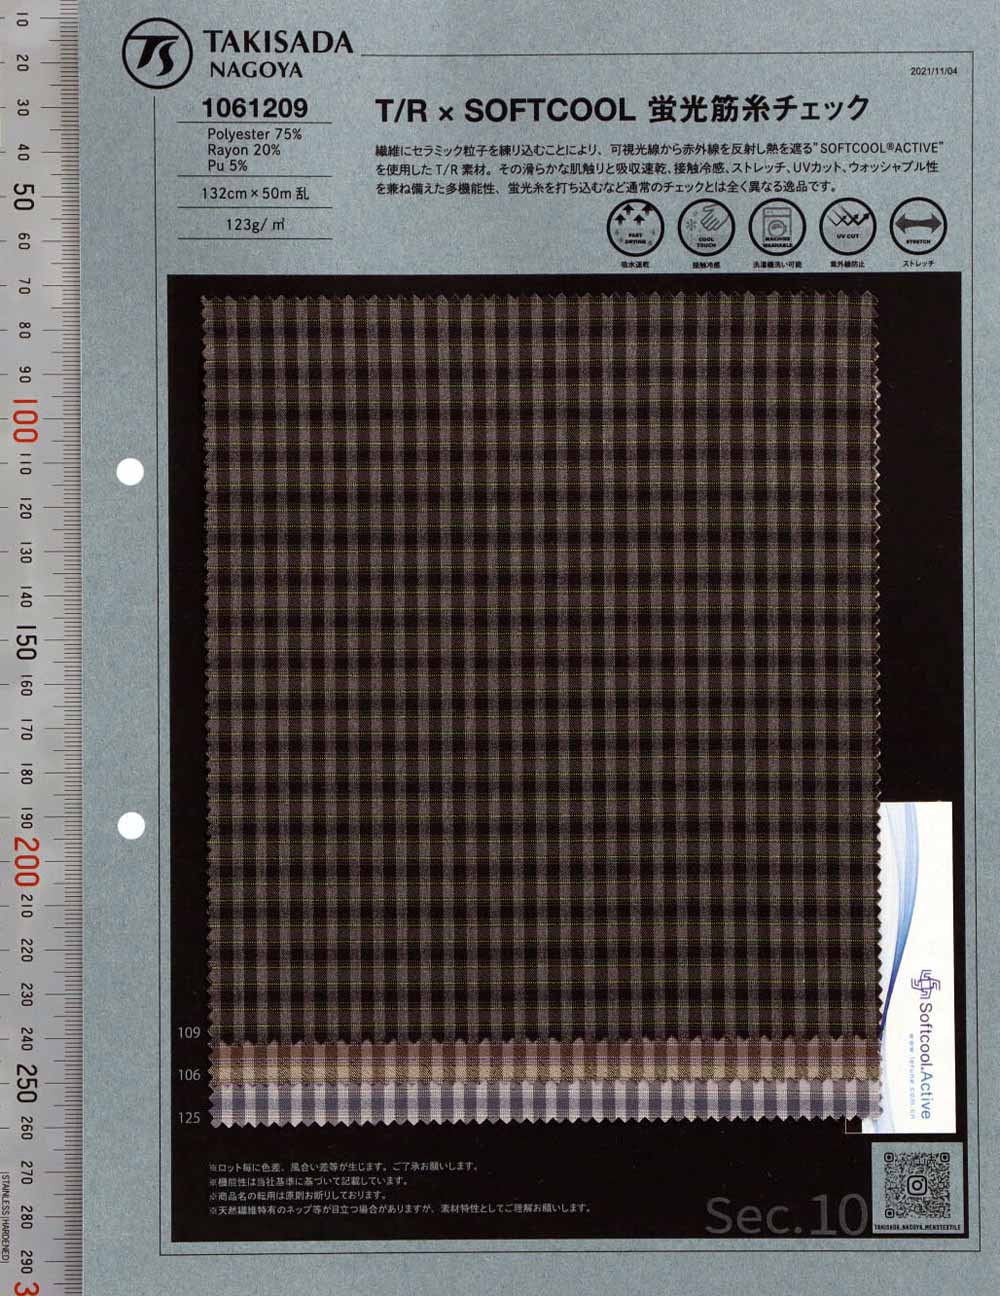 1061209 T / R × SOFTCOOL Controllo Filettatura Fluorescente[Tessile / Tessuto] Takisada Nagoya